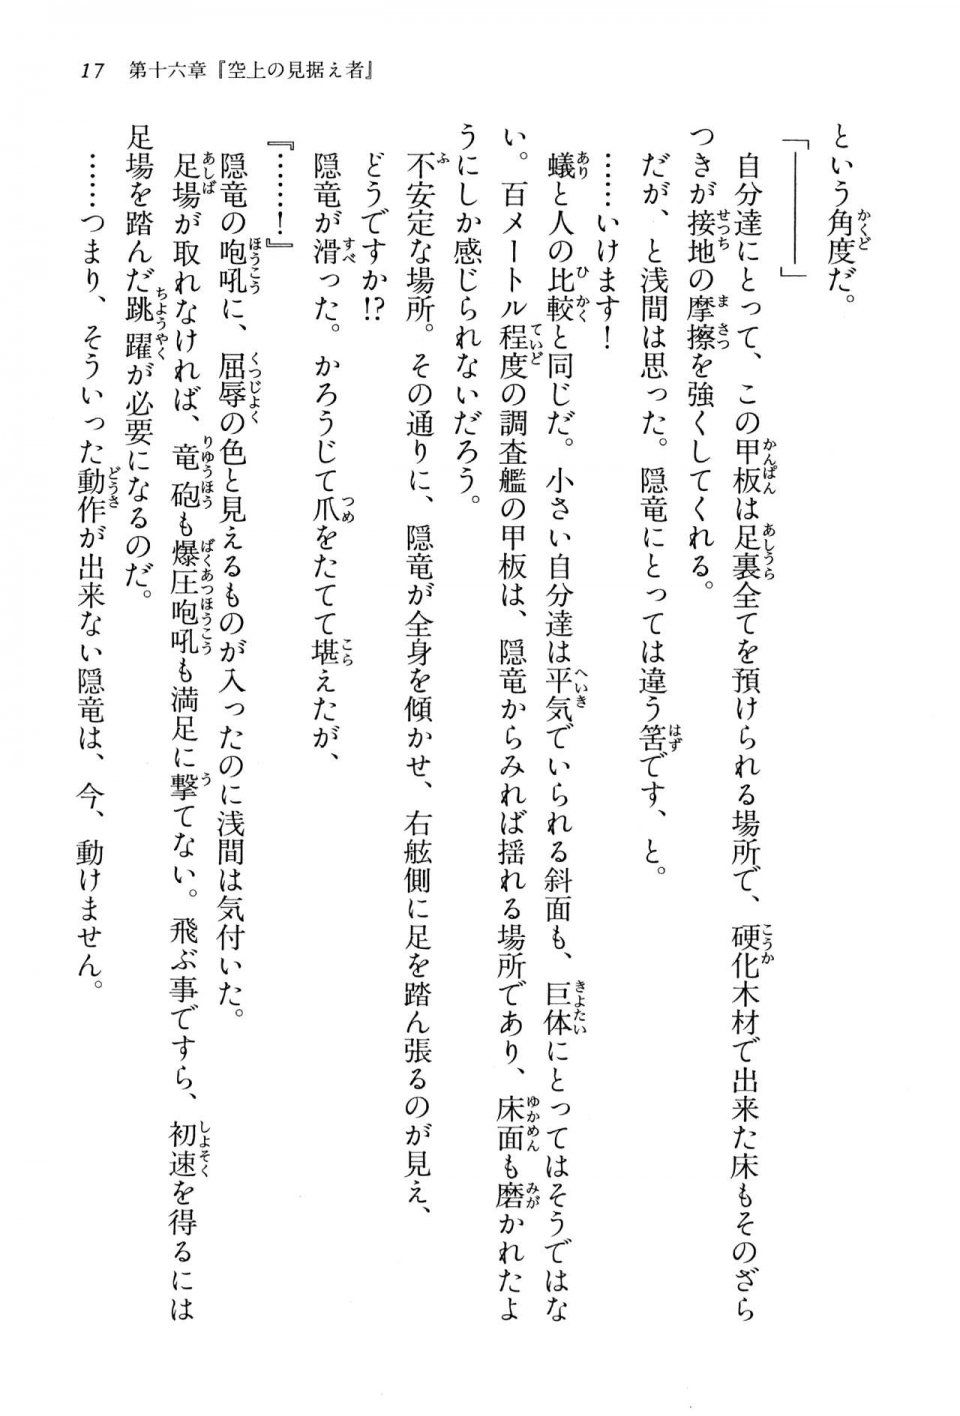 Kyoukai Senjou no Horizon BD Special Mininovel Vol 4(2B) - Photo #21